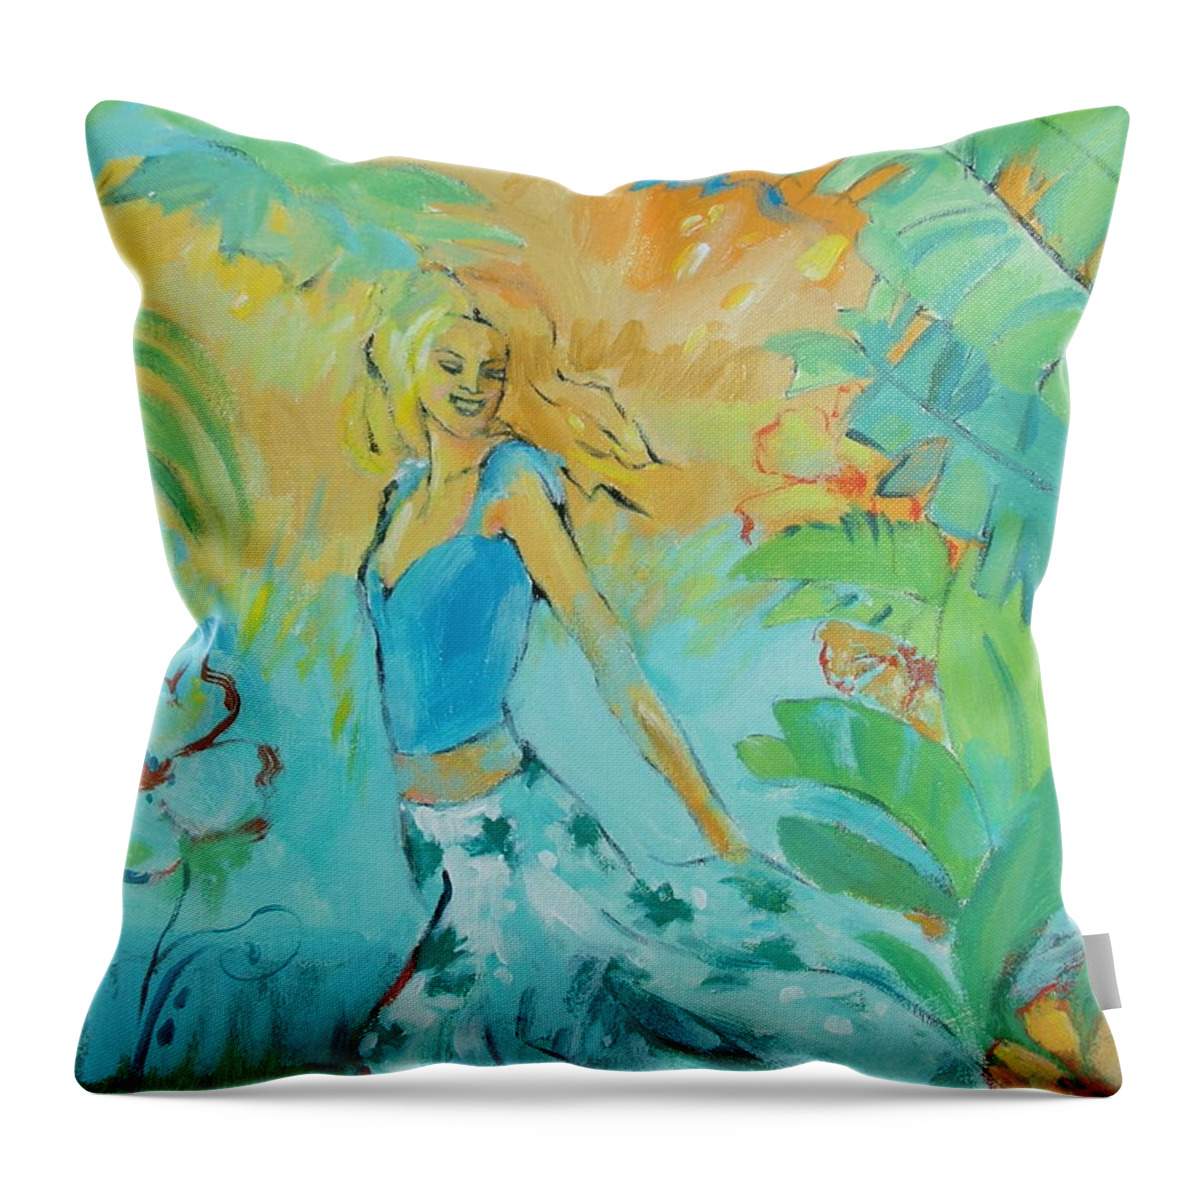 Acrylic Throw Pillow featuring the painting Summer Rhythms by Dianna Willman